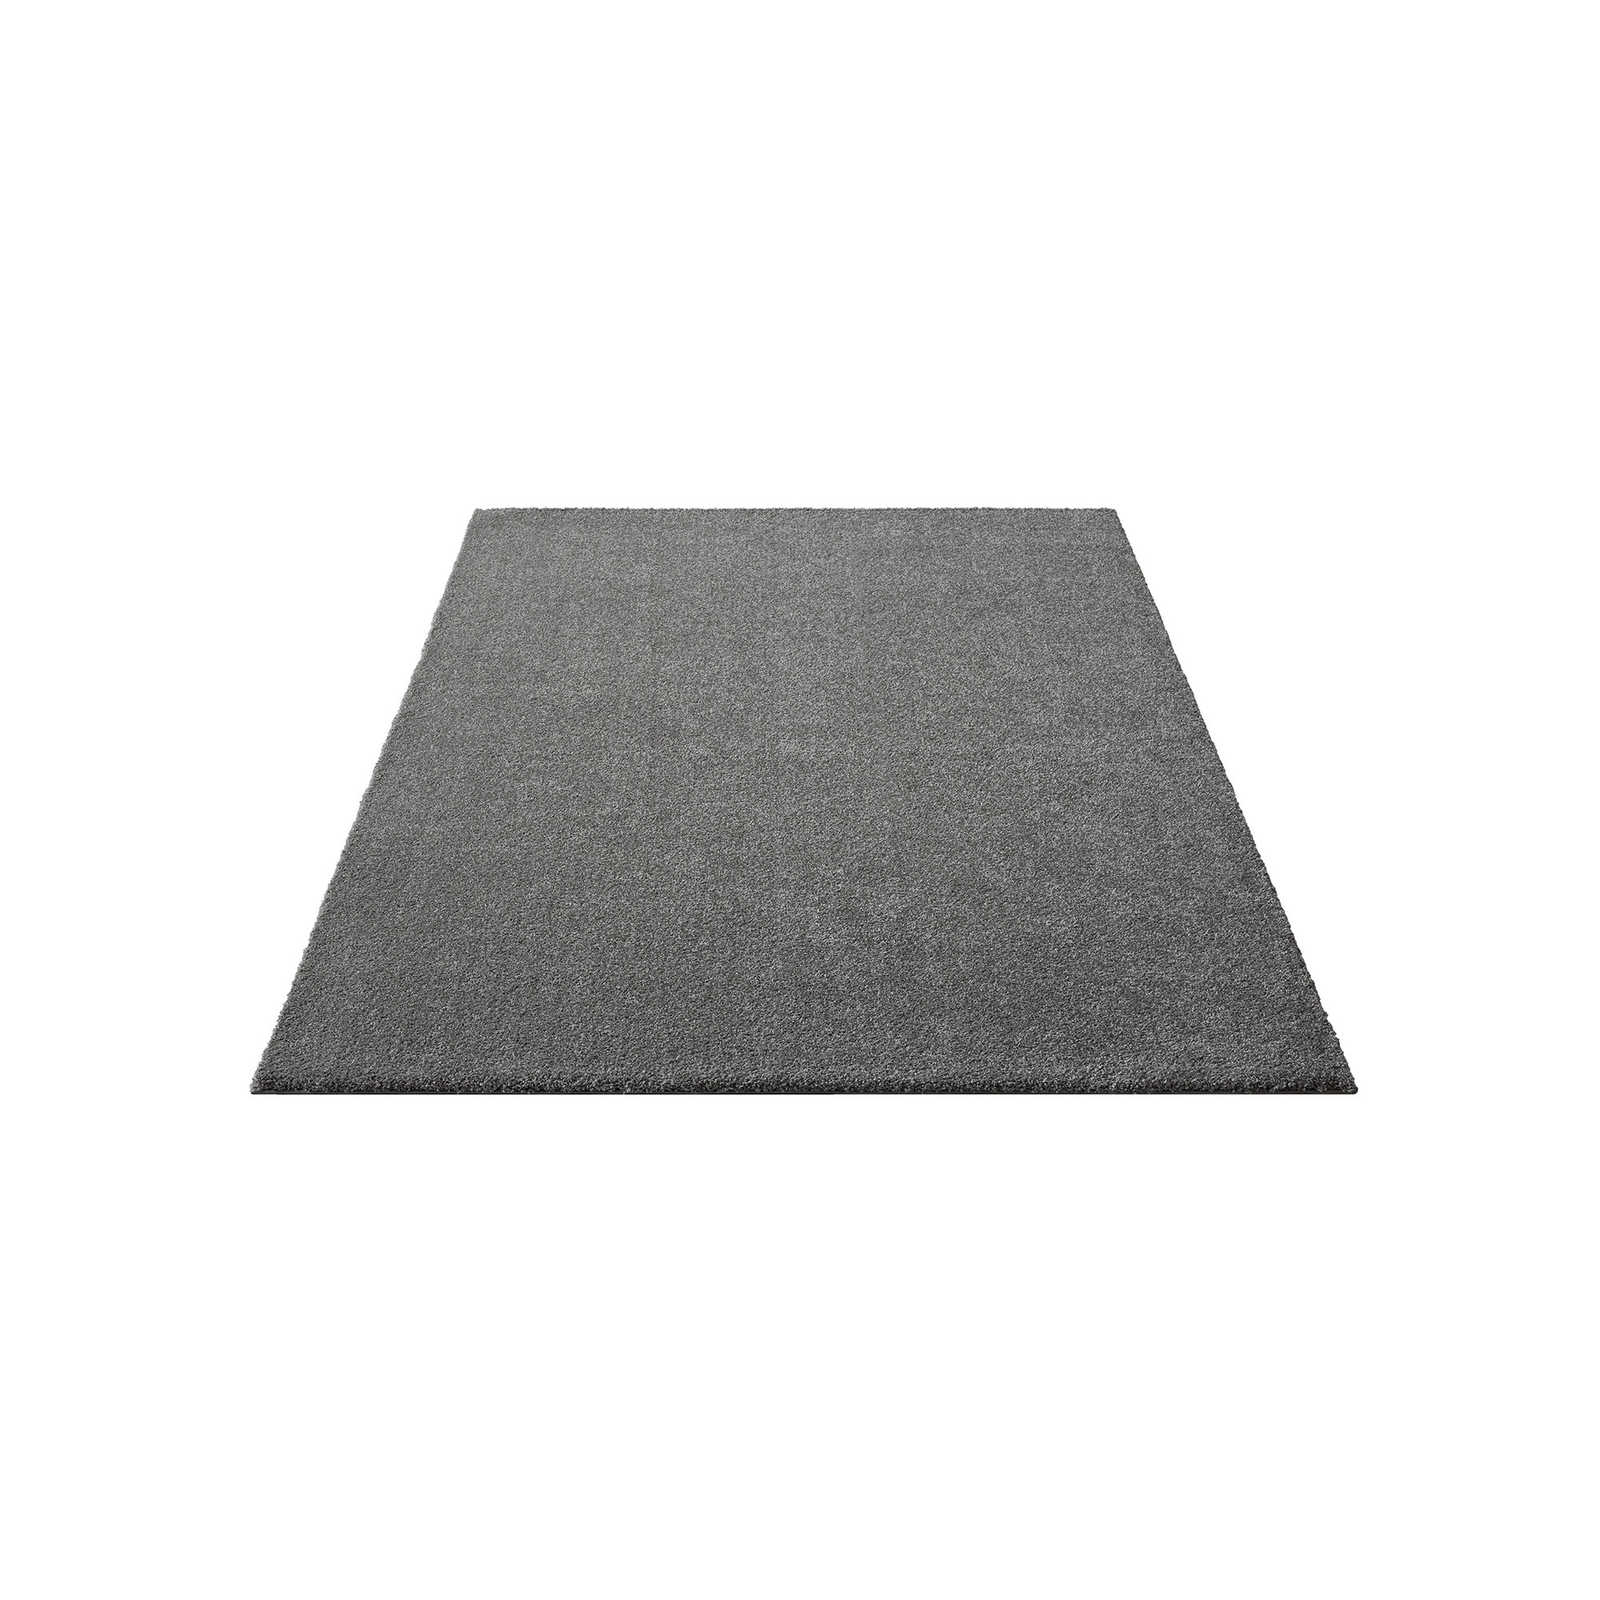 Fluffy short pile carpet in grey - 200 x 140 cm
